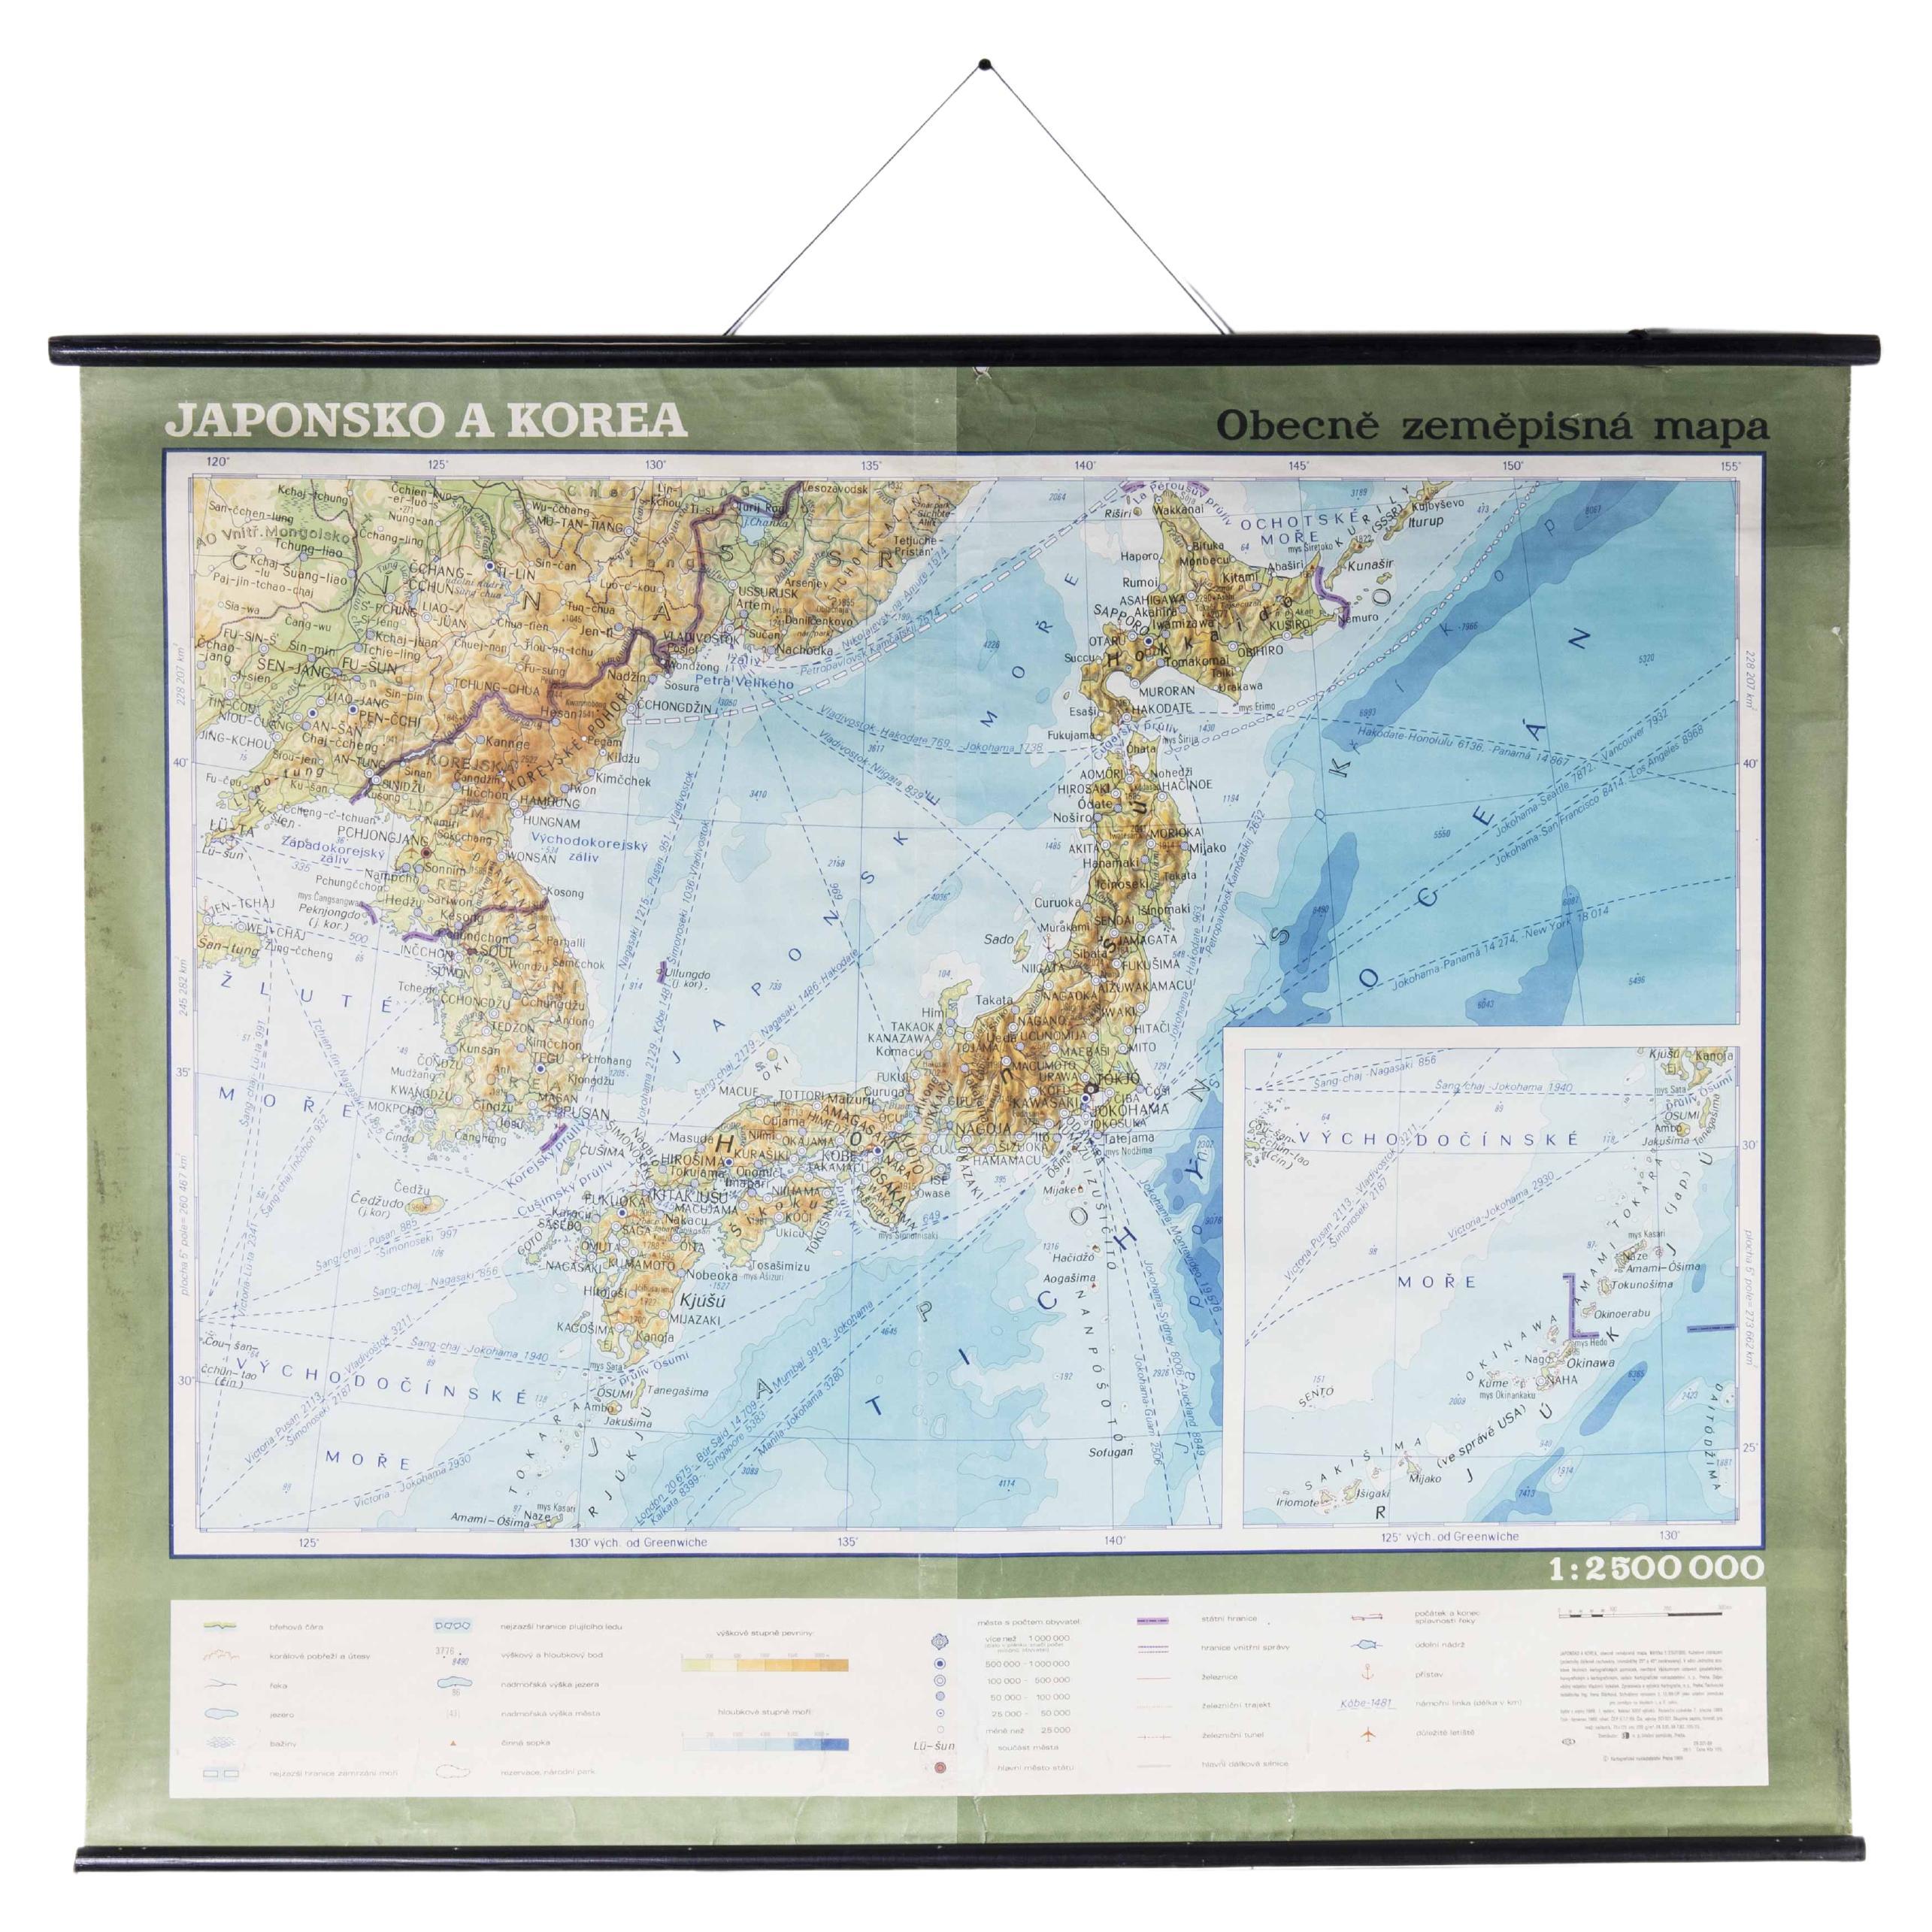 Late 20th Century Educational Geographic Map - Japan - Korea